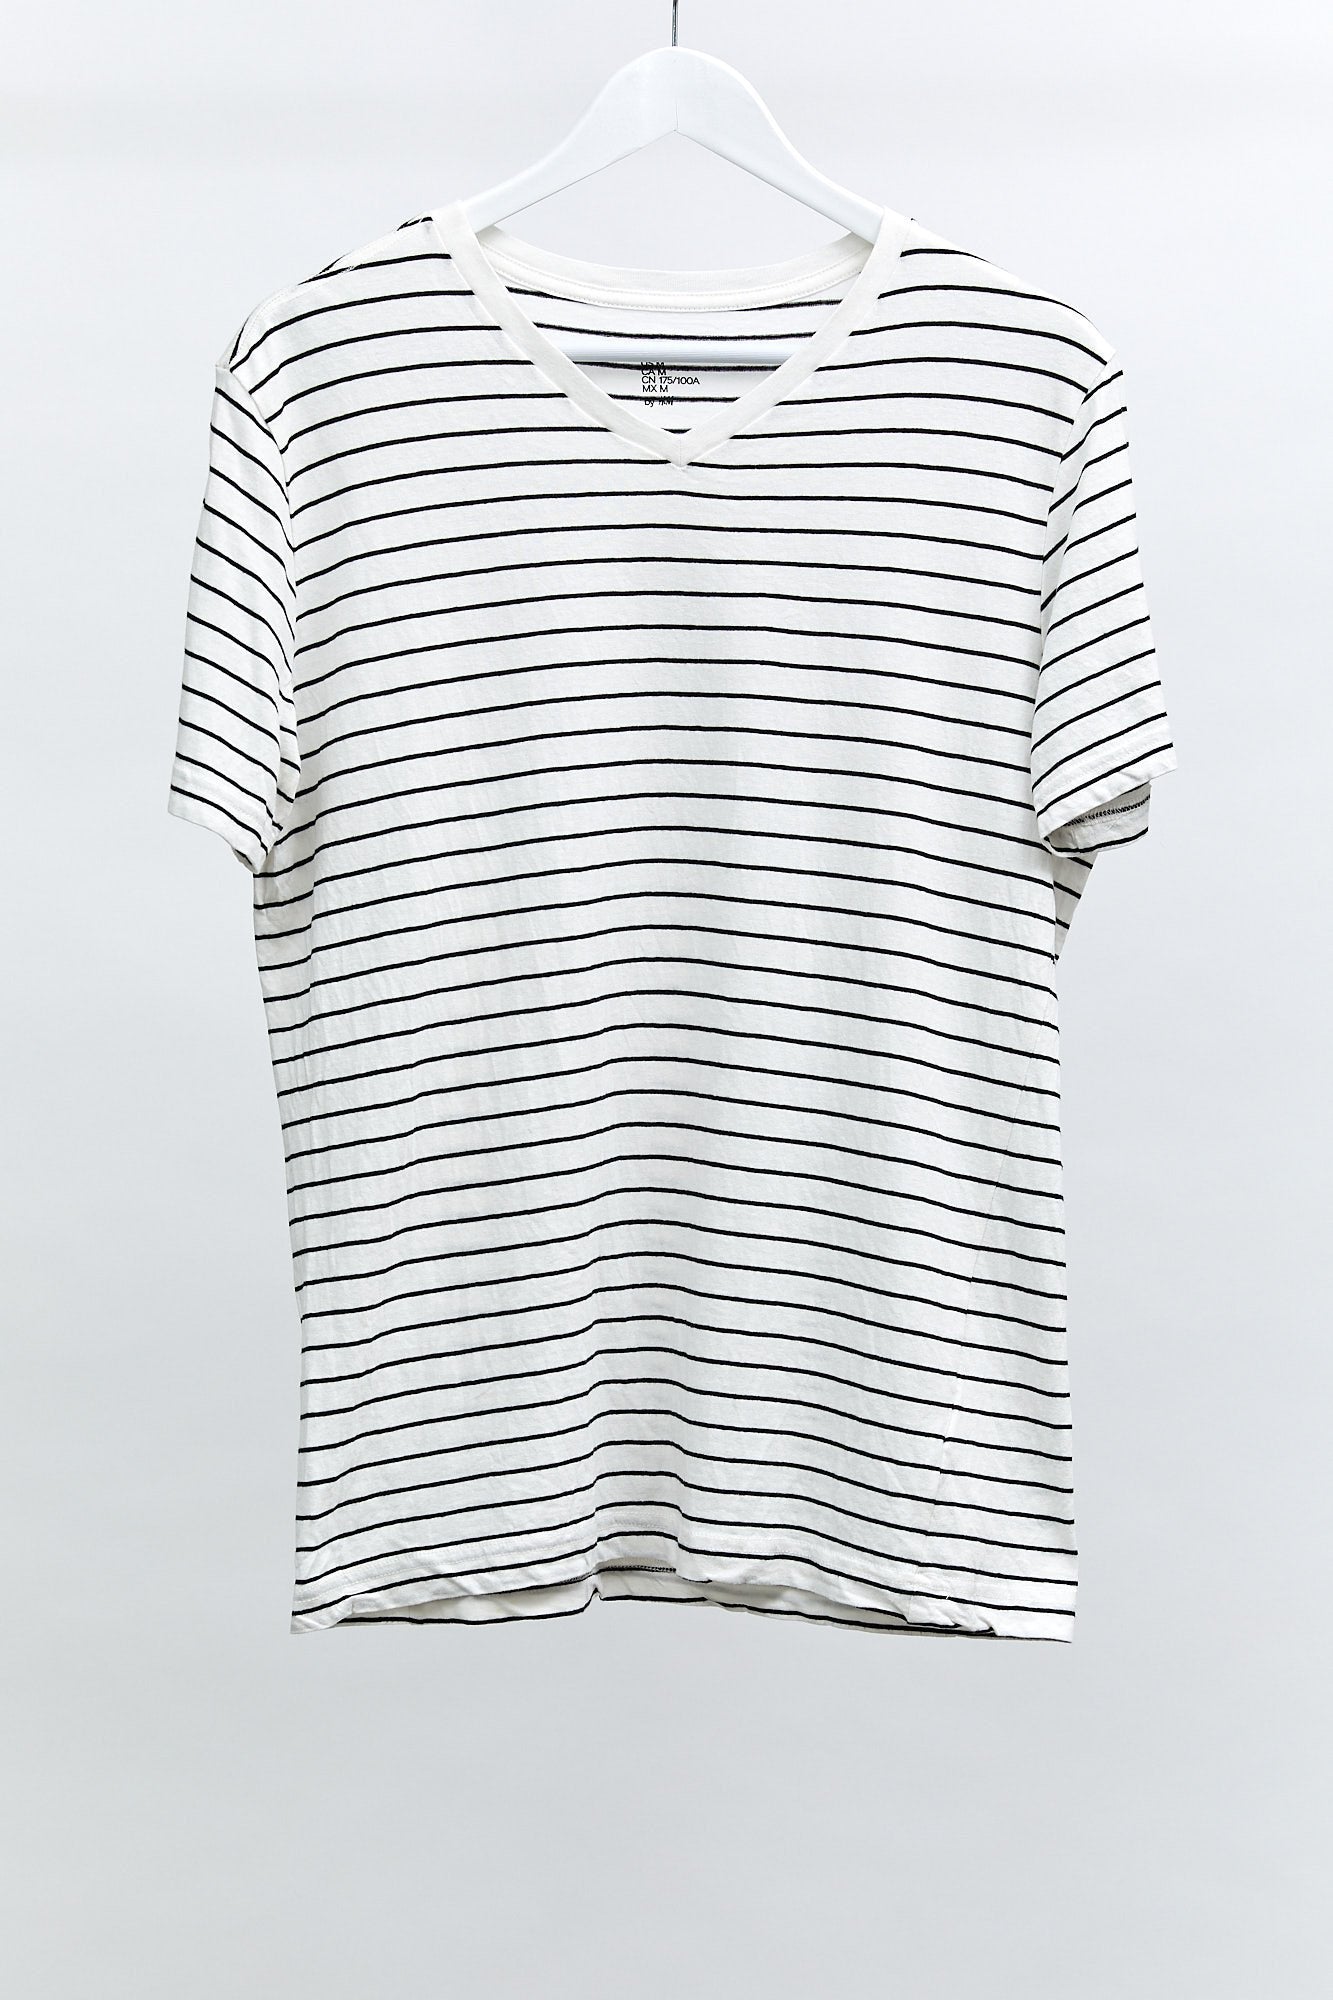 Mens Black and White Stripe T-Shirt: Size Medium